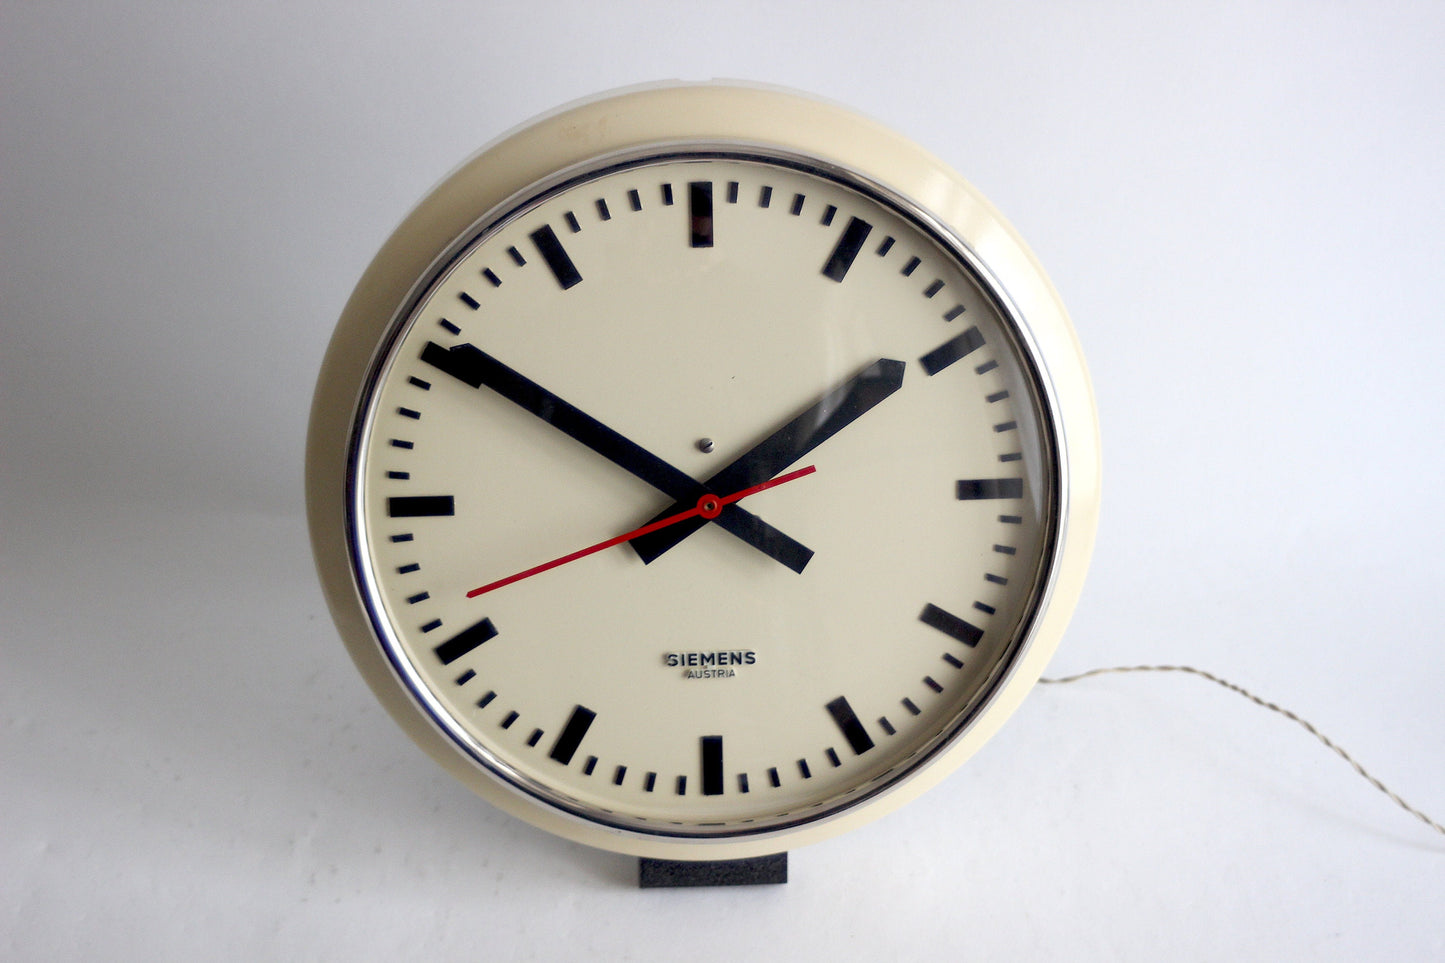 SIEMENS AUSTRIA factory / workshop wall clock. Austria 1950s. Completely original and serviced